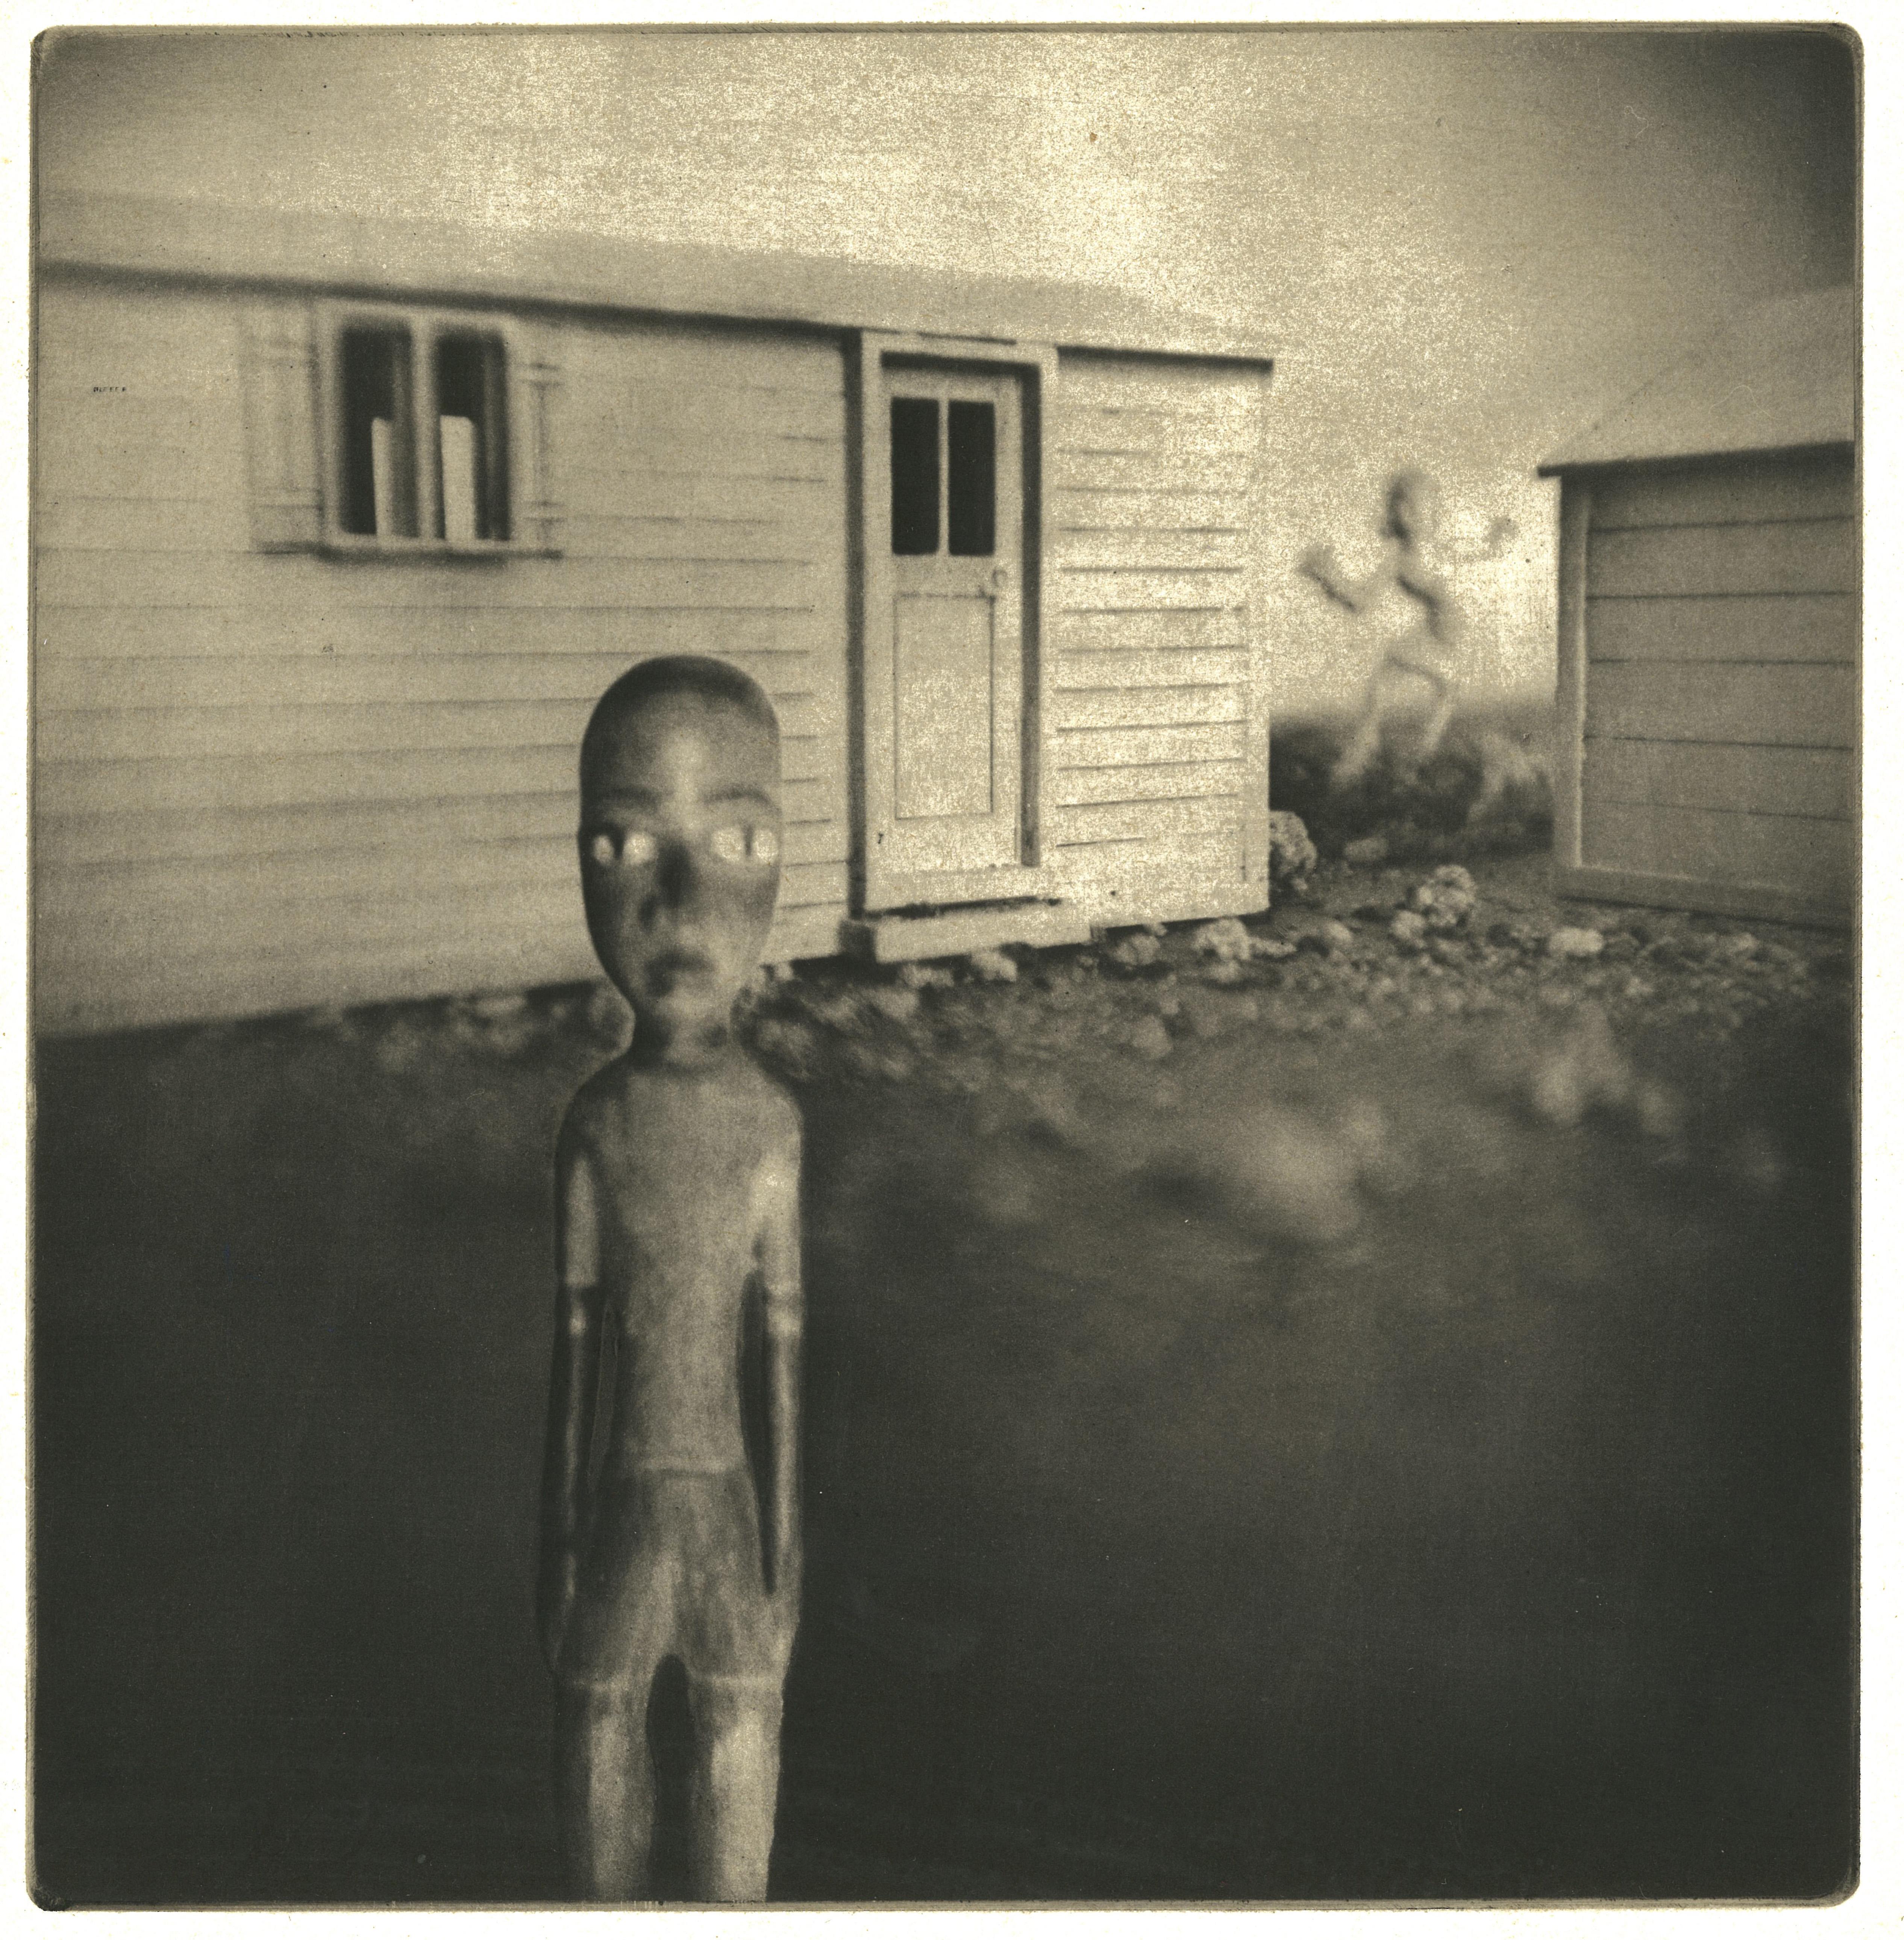 Carol Munder Black and White Photograph – In Amerika ausdrucksstark, monochrom, ausdrucksstark, Cousin